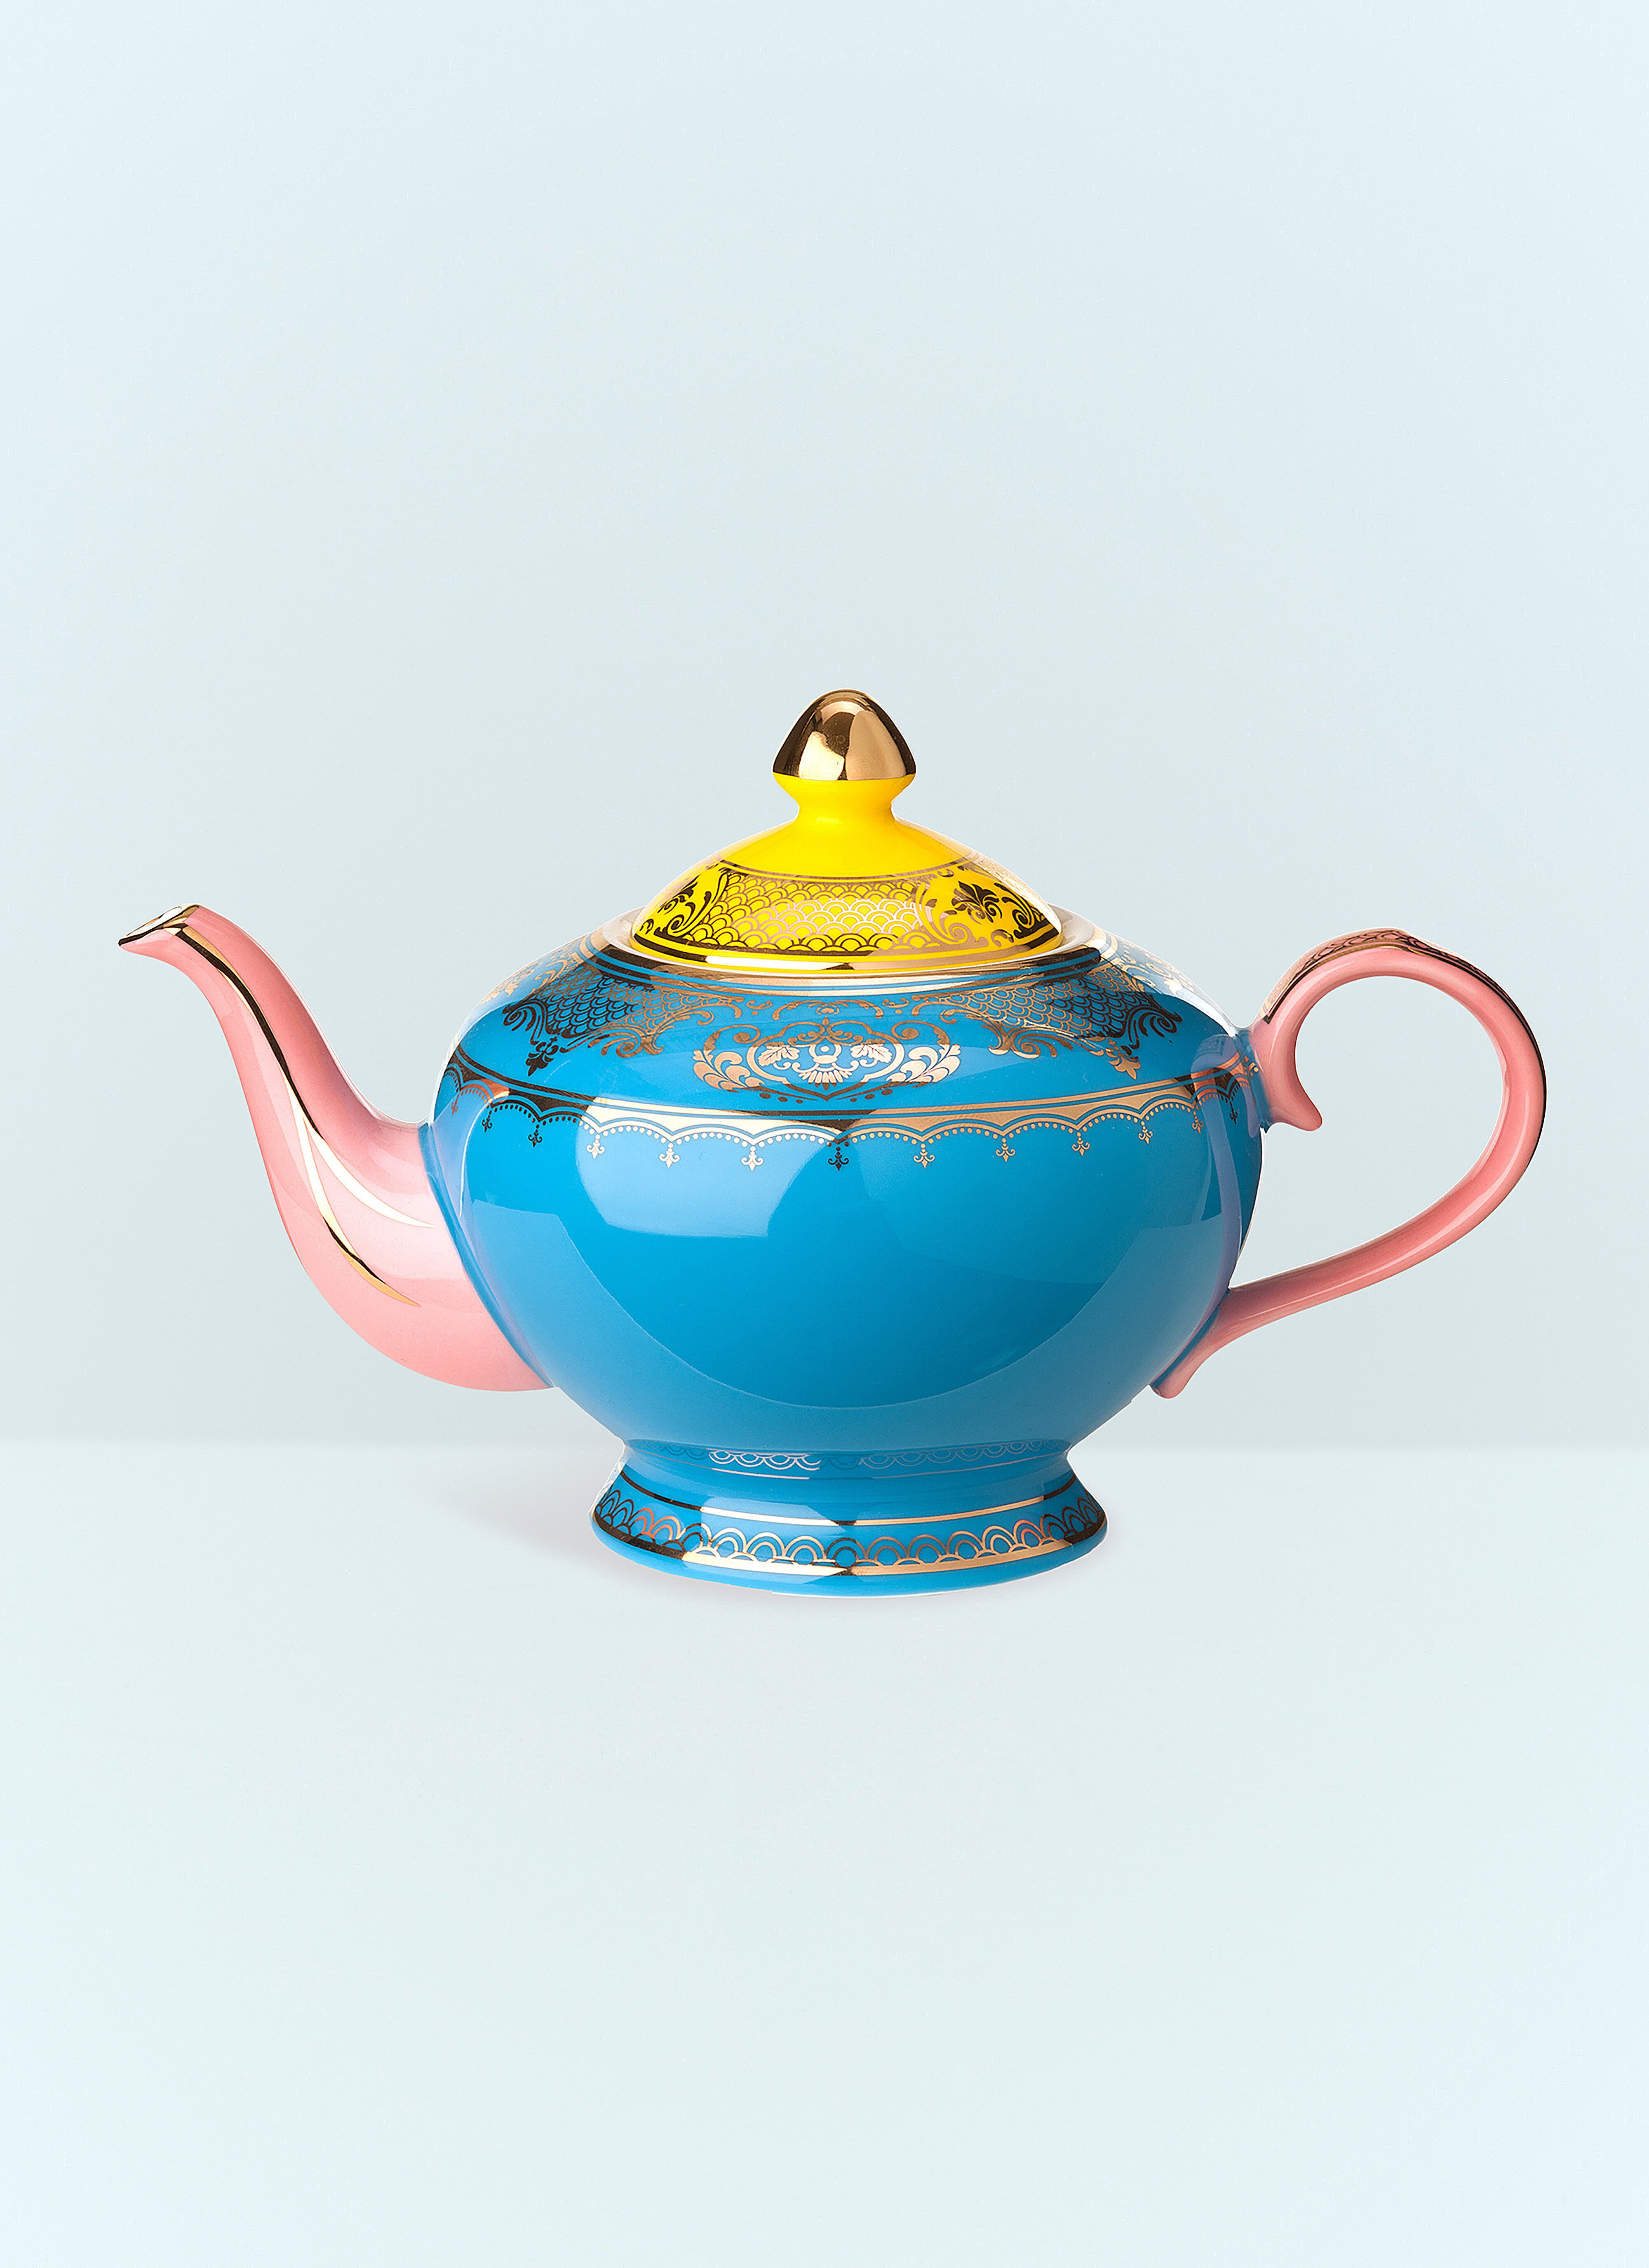 Polspotten Grandpa Teapot Multicolour wps0691145